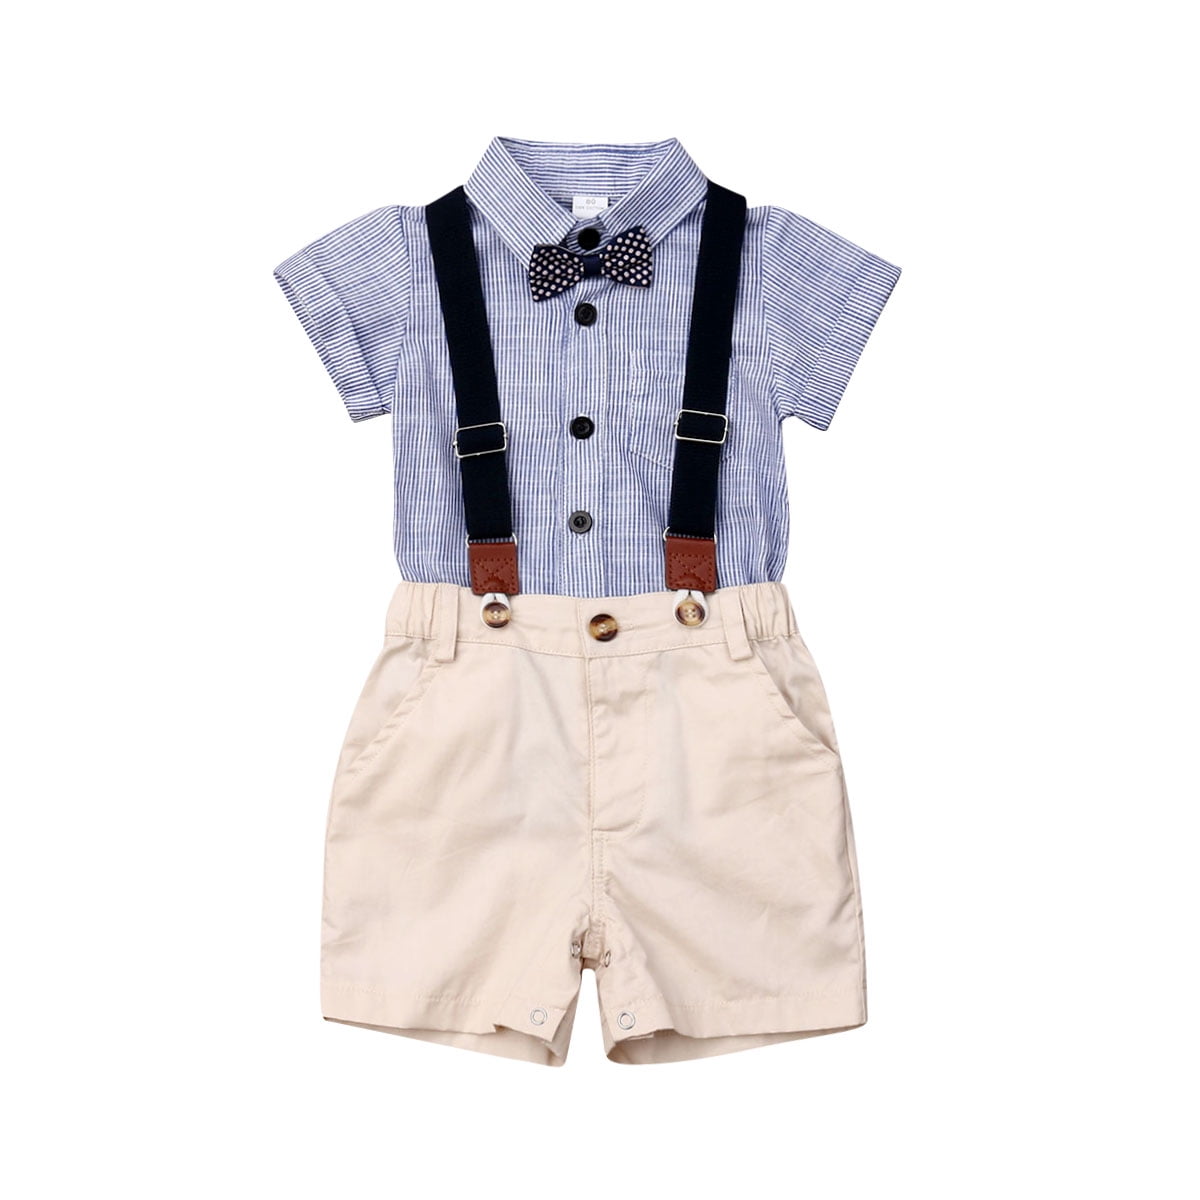 Toddler Kids Gentlemen Boys Bowtie Short Sleeve Shirt&Suspenders Shorts Outfits